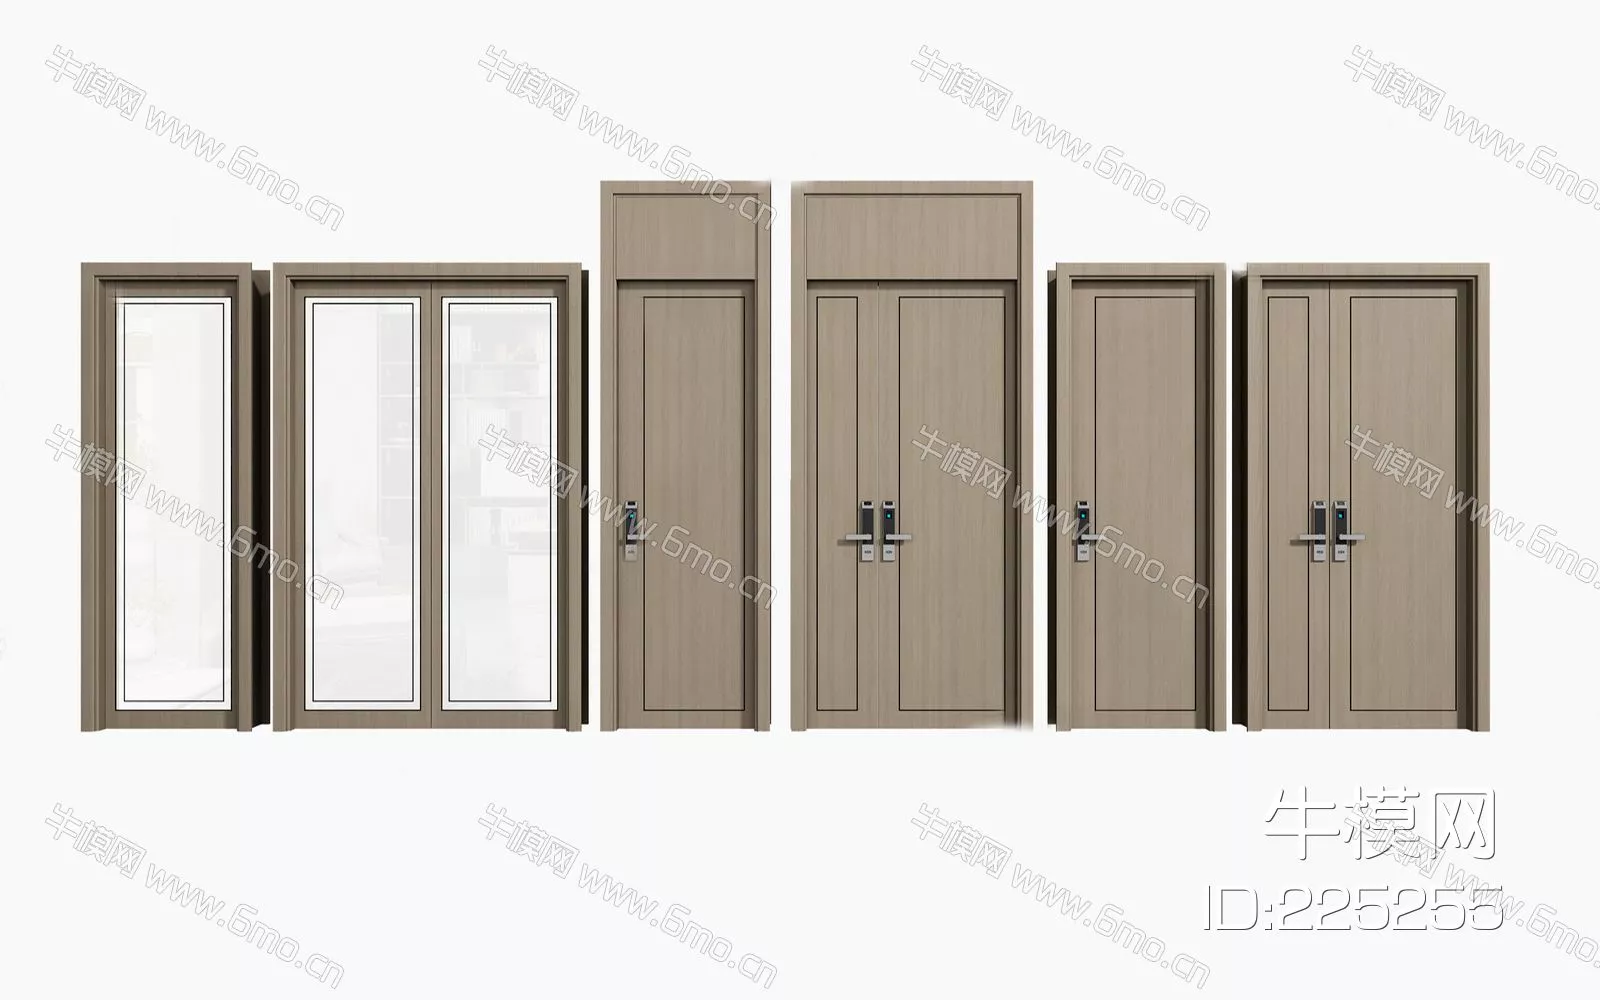 MODERN DOOR AND WINDOWS - SKETCHUP 3D MODEL - ENSCAPE - 225255